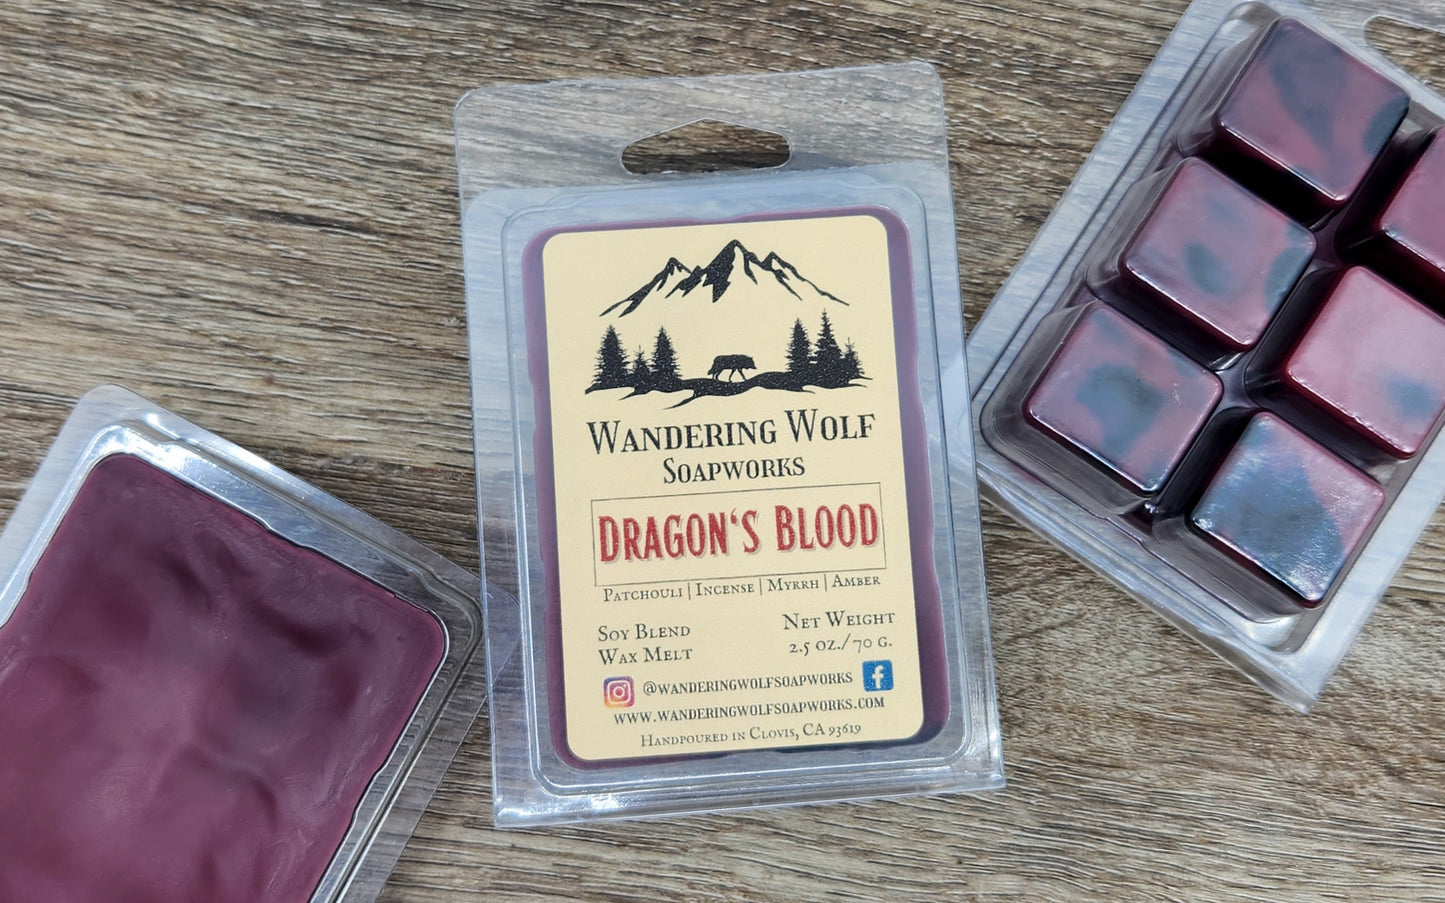 Dragon's Blood Wax Melt